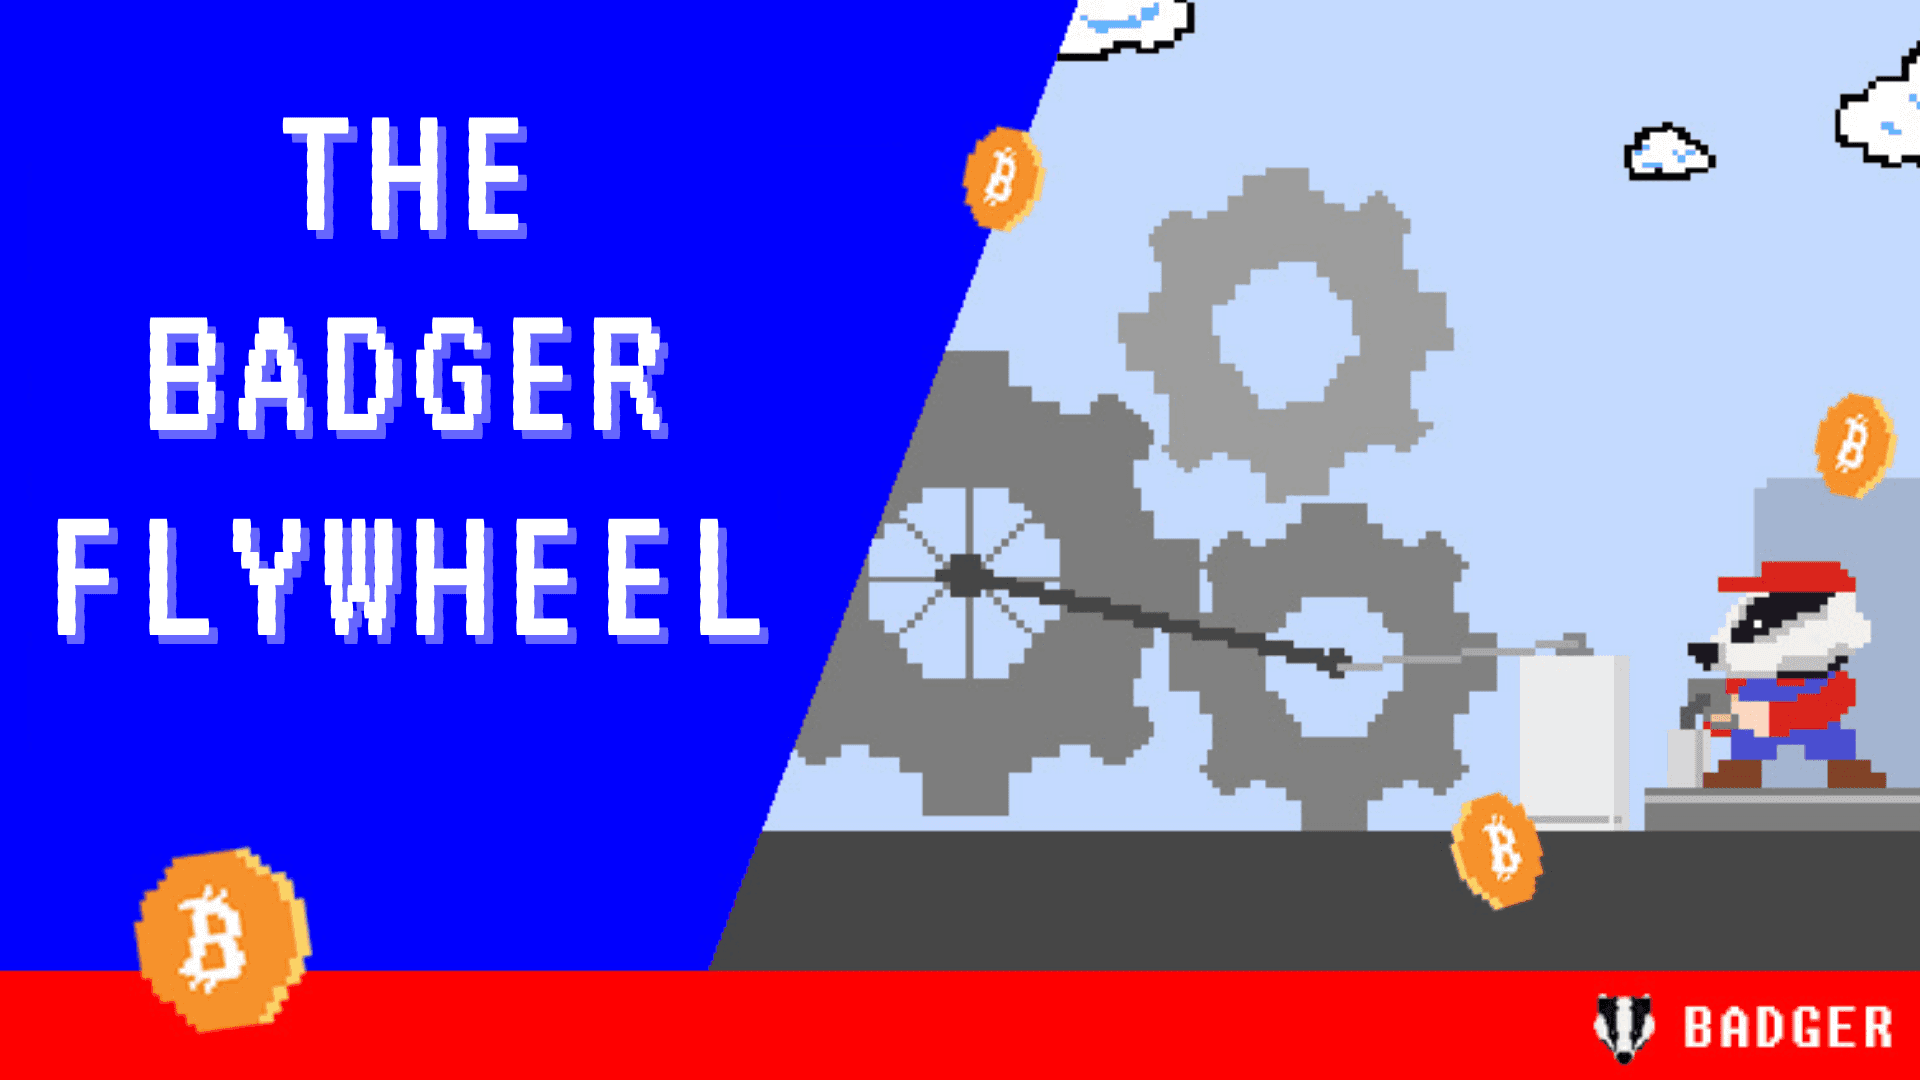 The Badger Flywheel